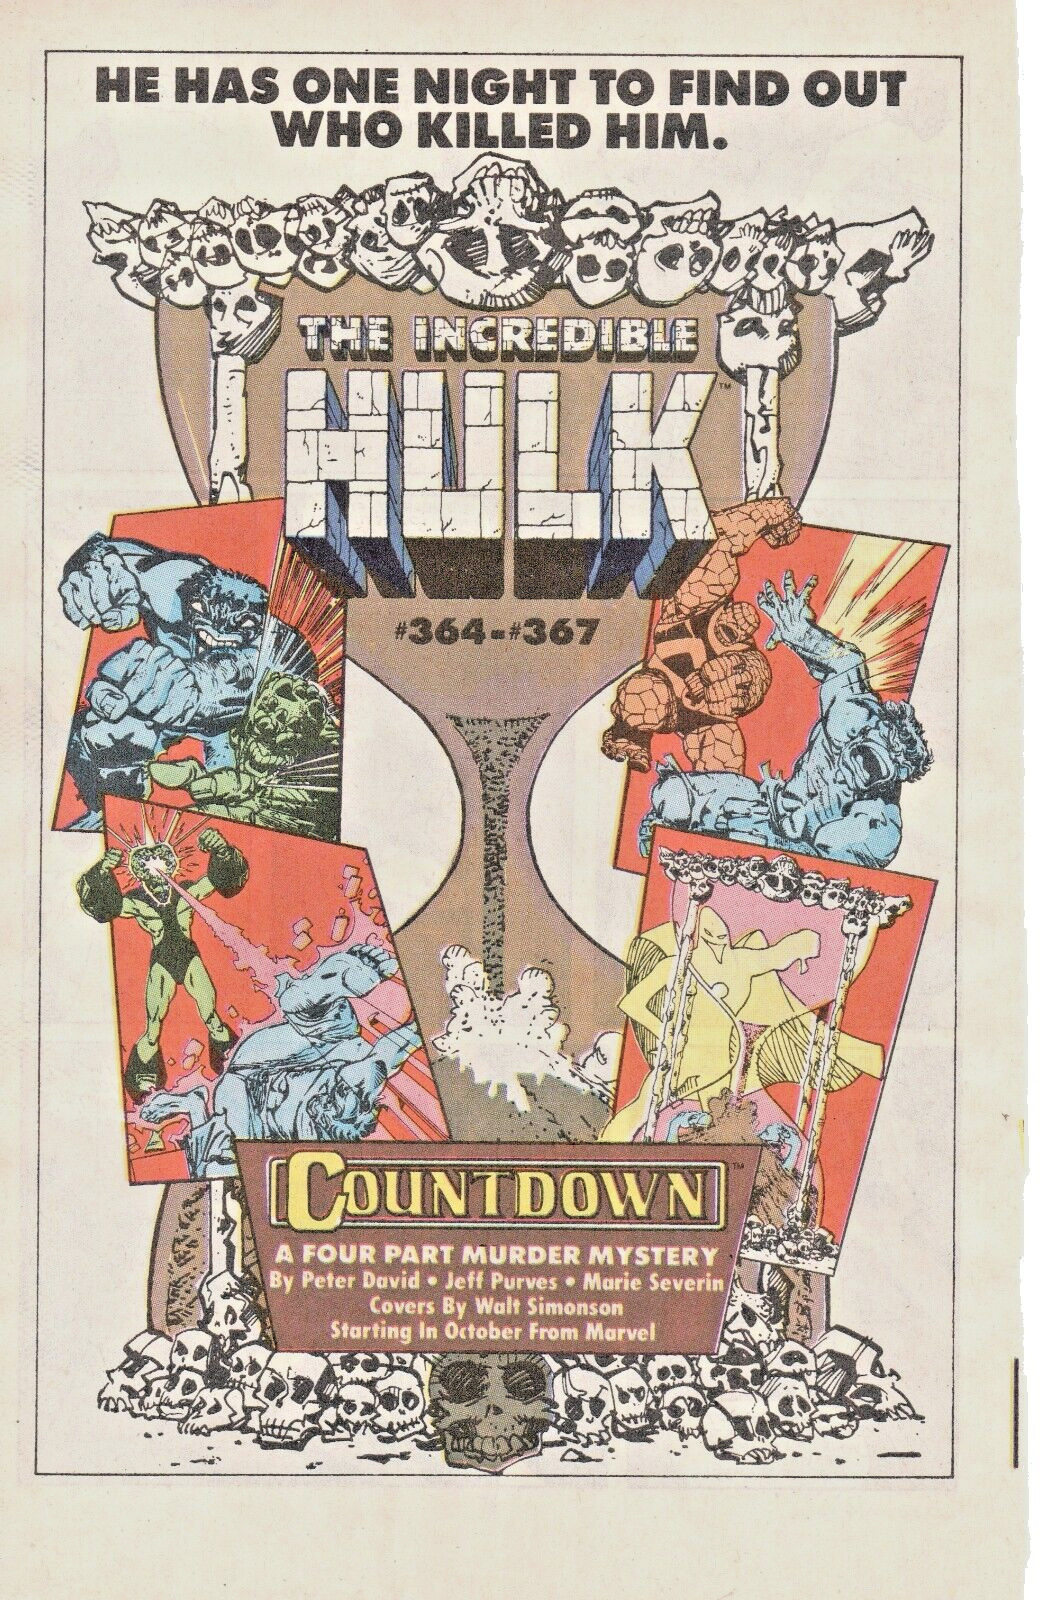 1989 THE INCREDIBLE HULK Countdown 364-367 Marvel Comics Promo PRINT AD ART